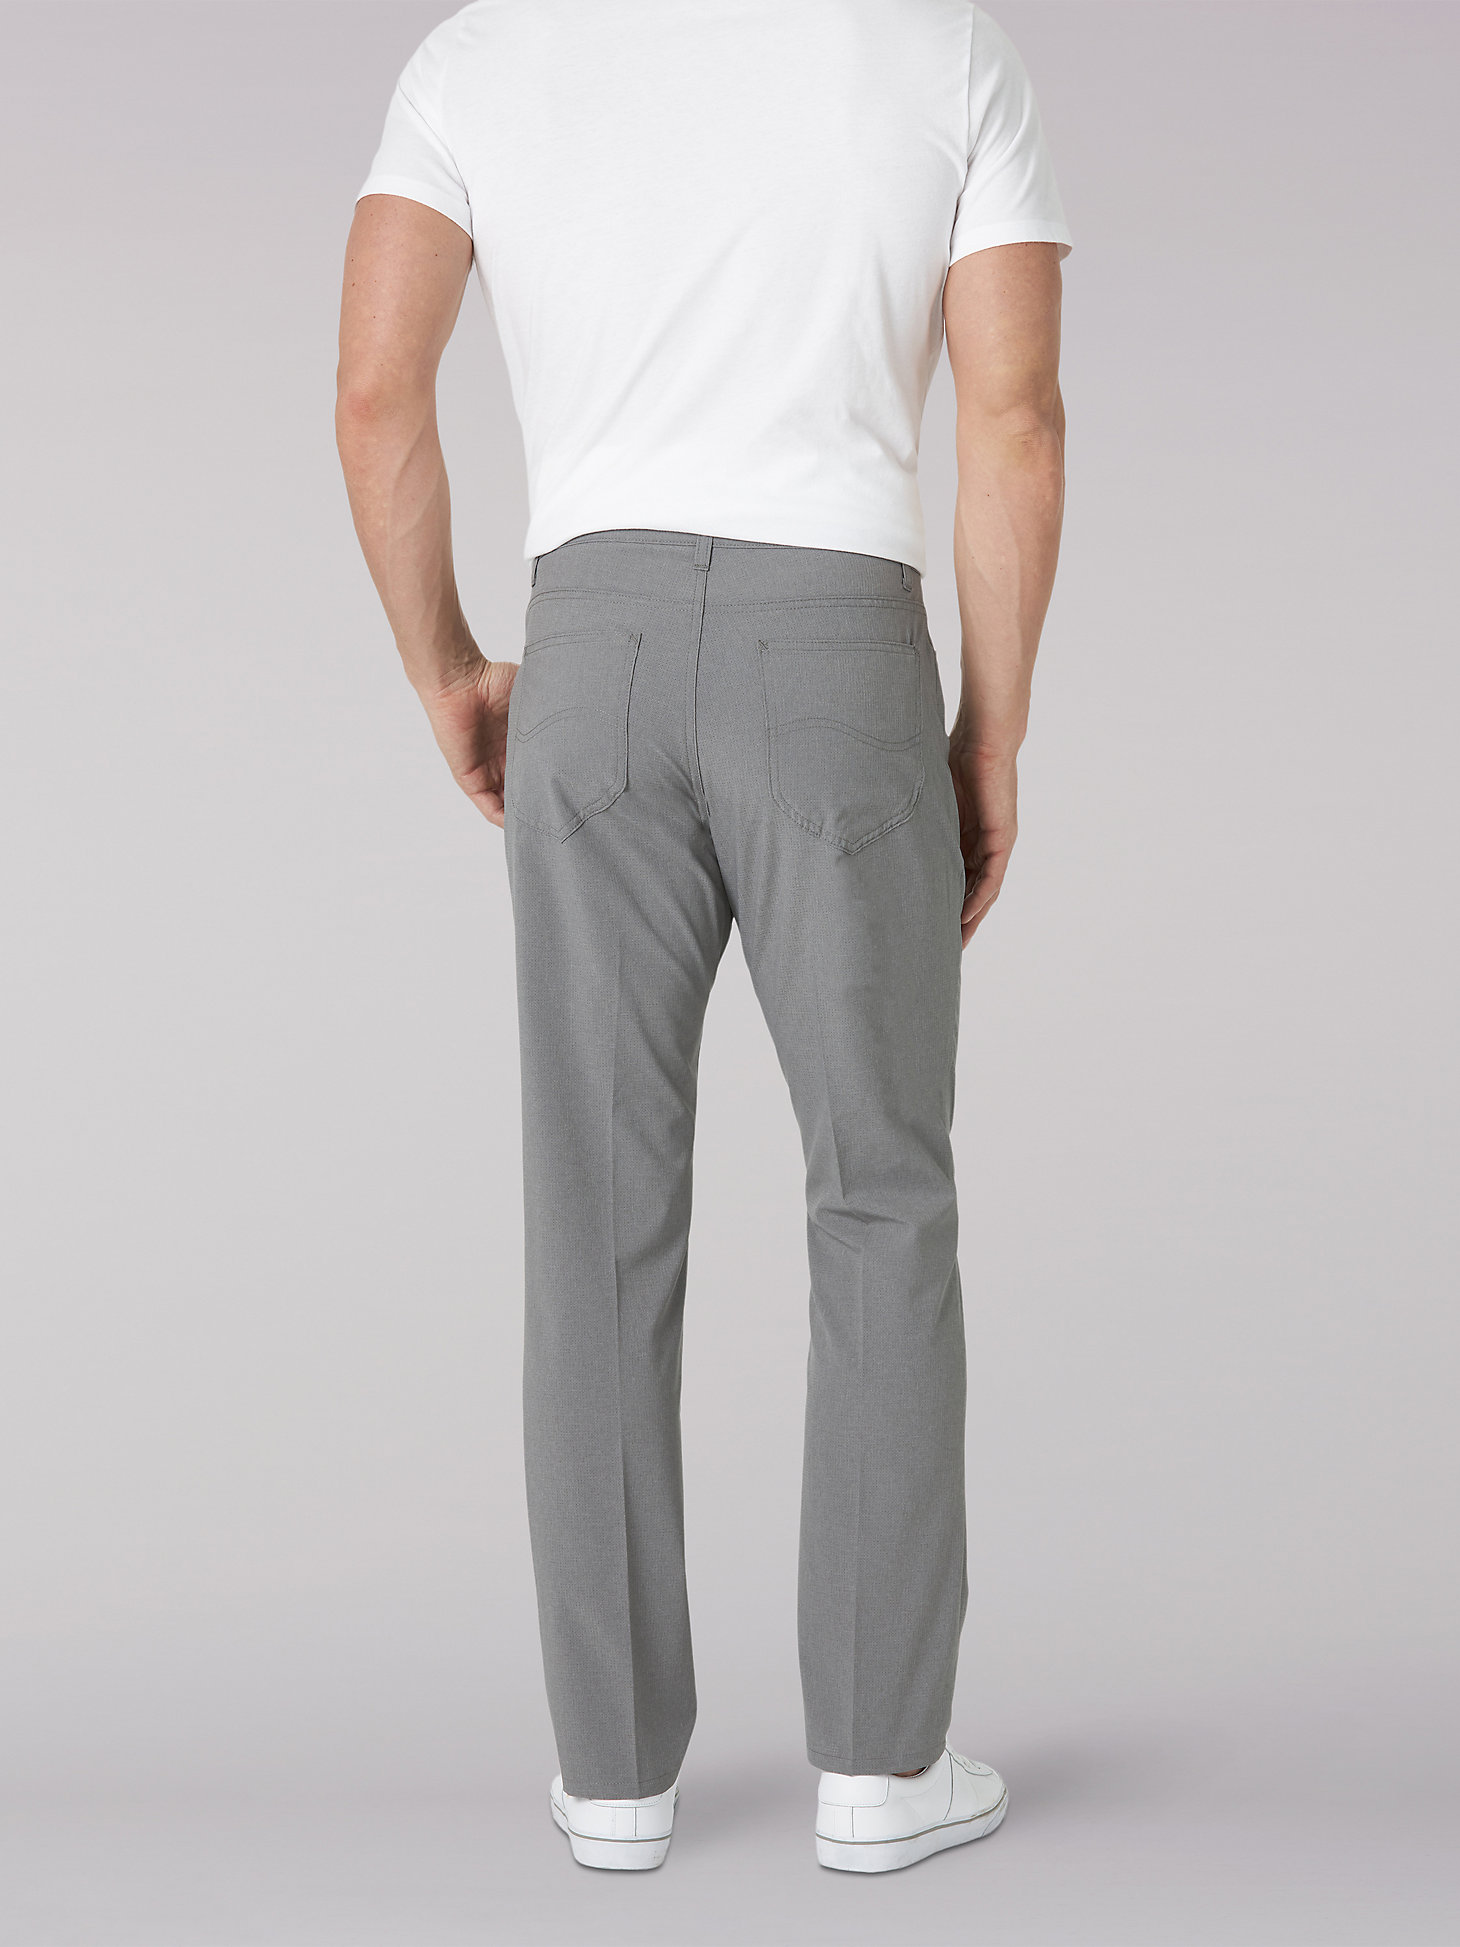 Men's Air-Flow Slim Tapered Pant in HD Grey alternative view 1